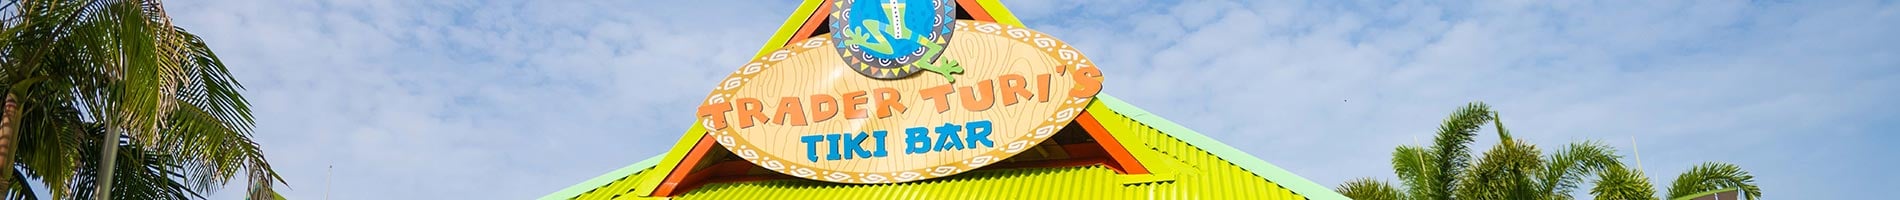 Trader Turis Tiki Bar at Aquatica Orlando